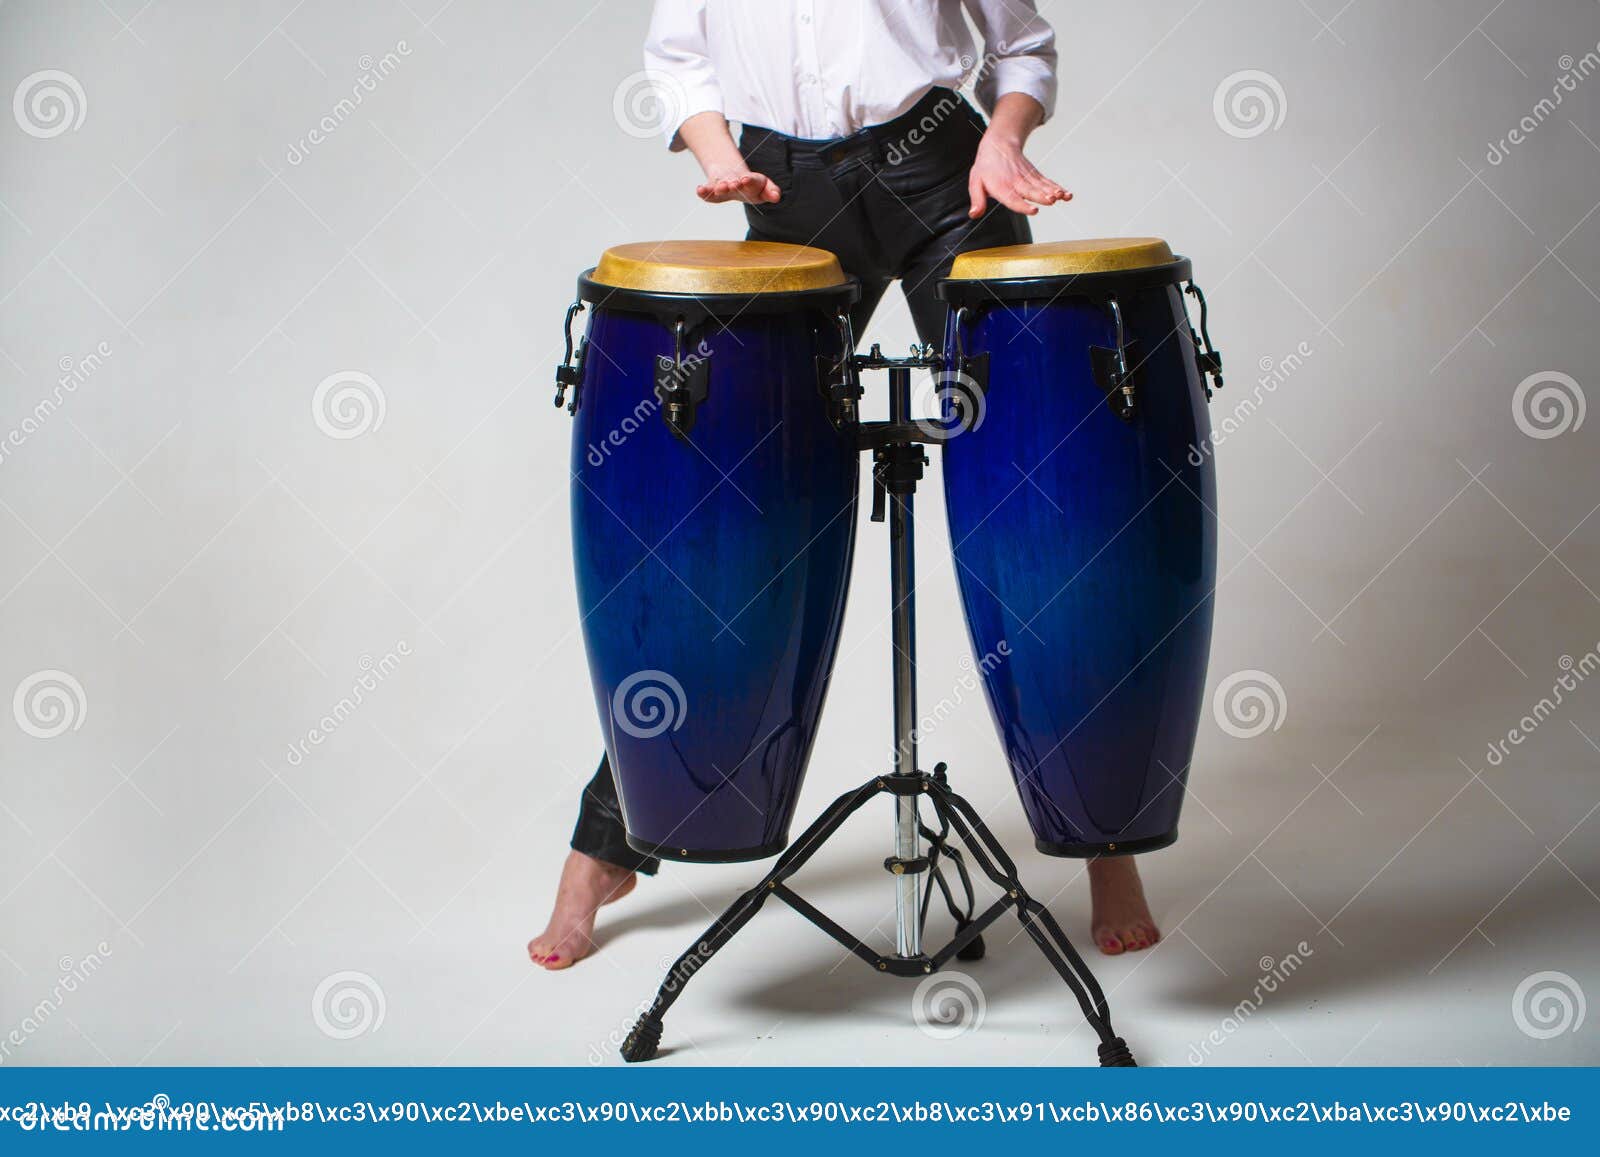 Type of drum